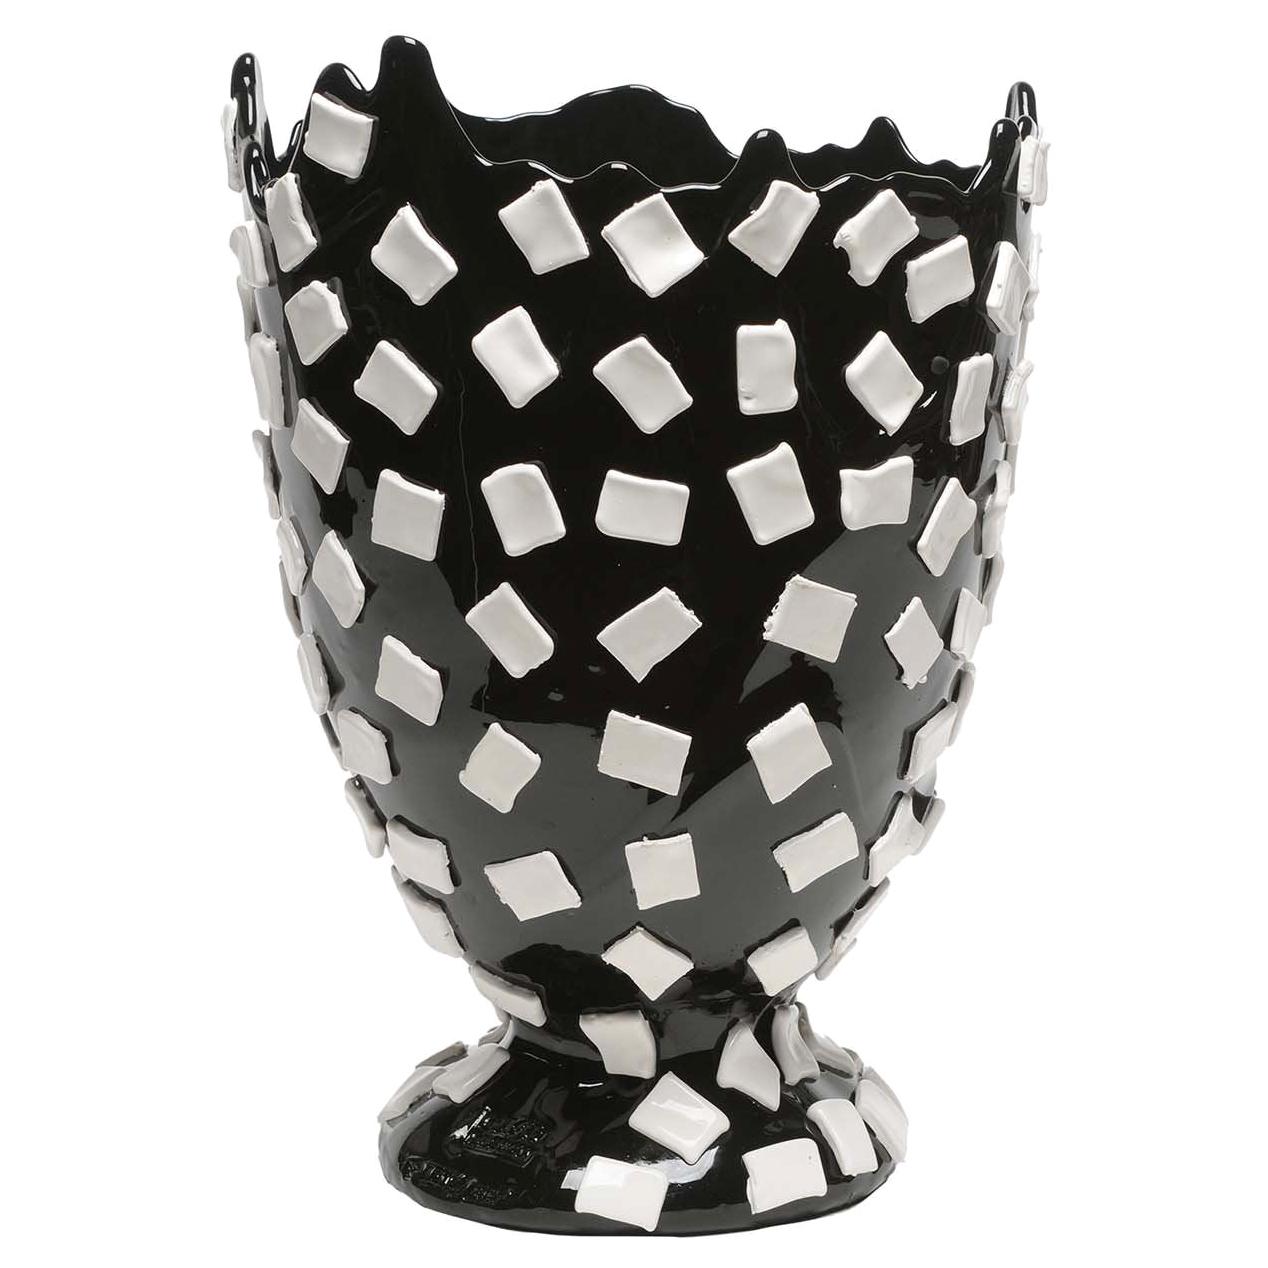 Grand vase Rock noir et blanc de Gaetano Pesce